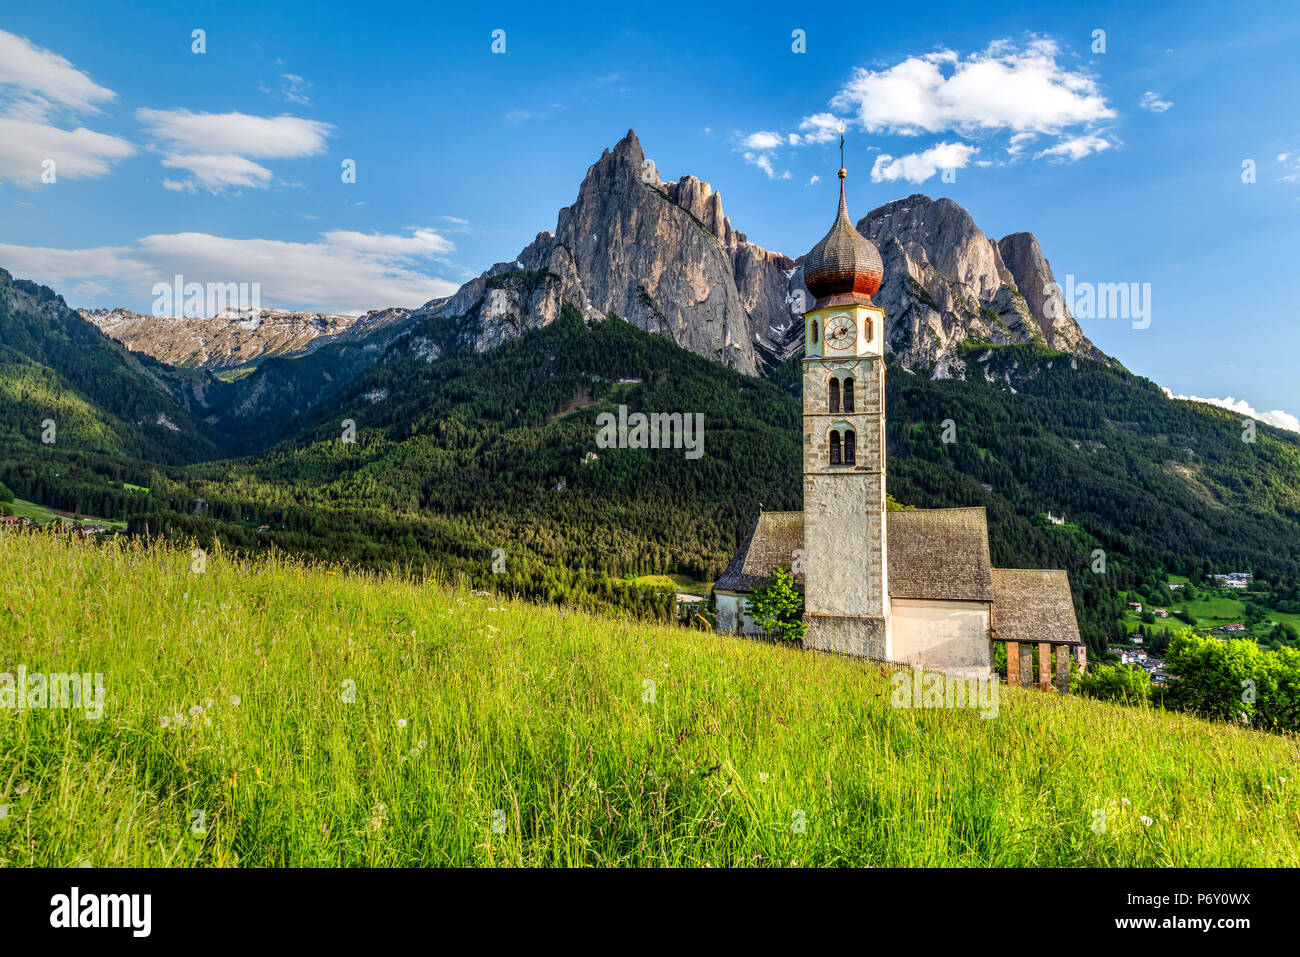 St. Valentin church, Castelrotto - Kastelruth, Trentino Alto Adige - South Tyrol, Italy Stock Photo